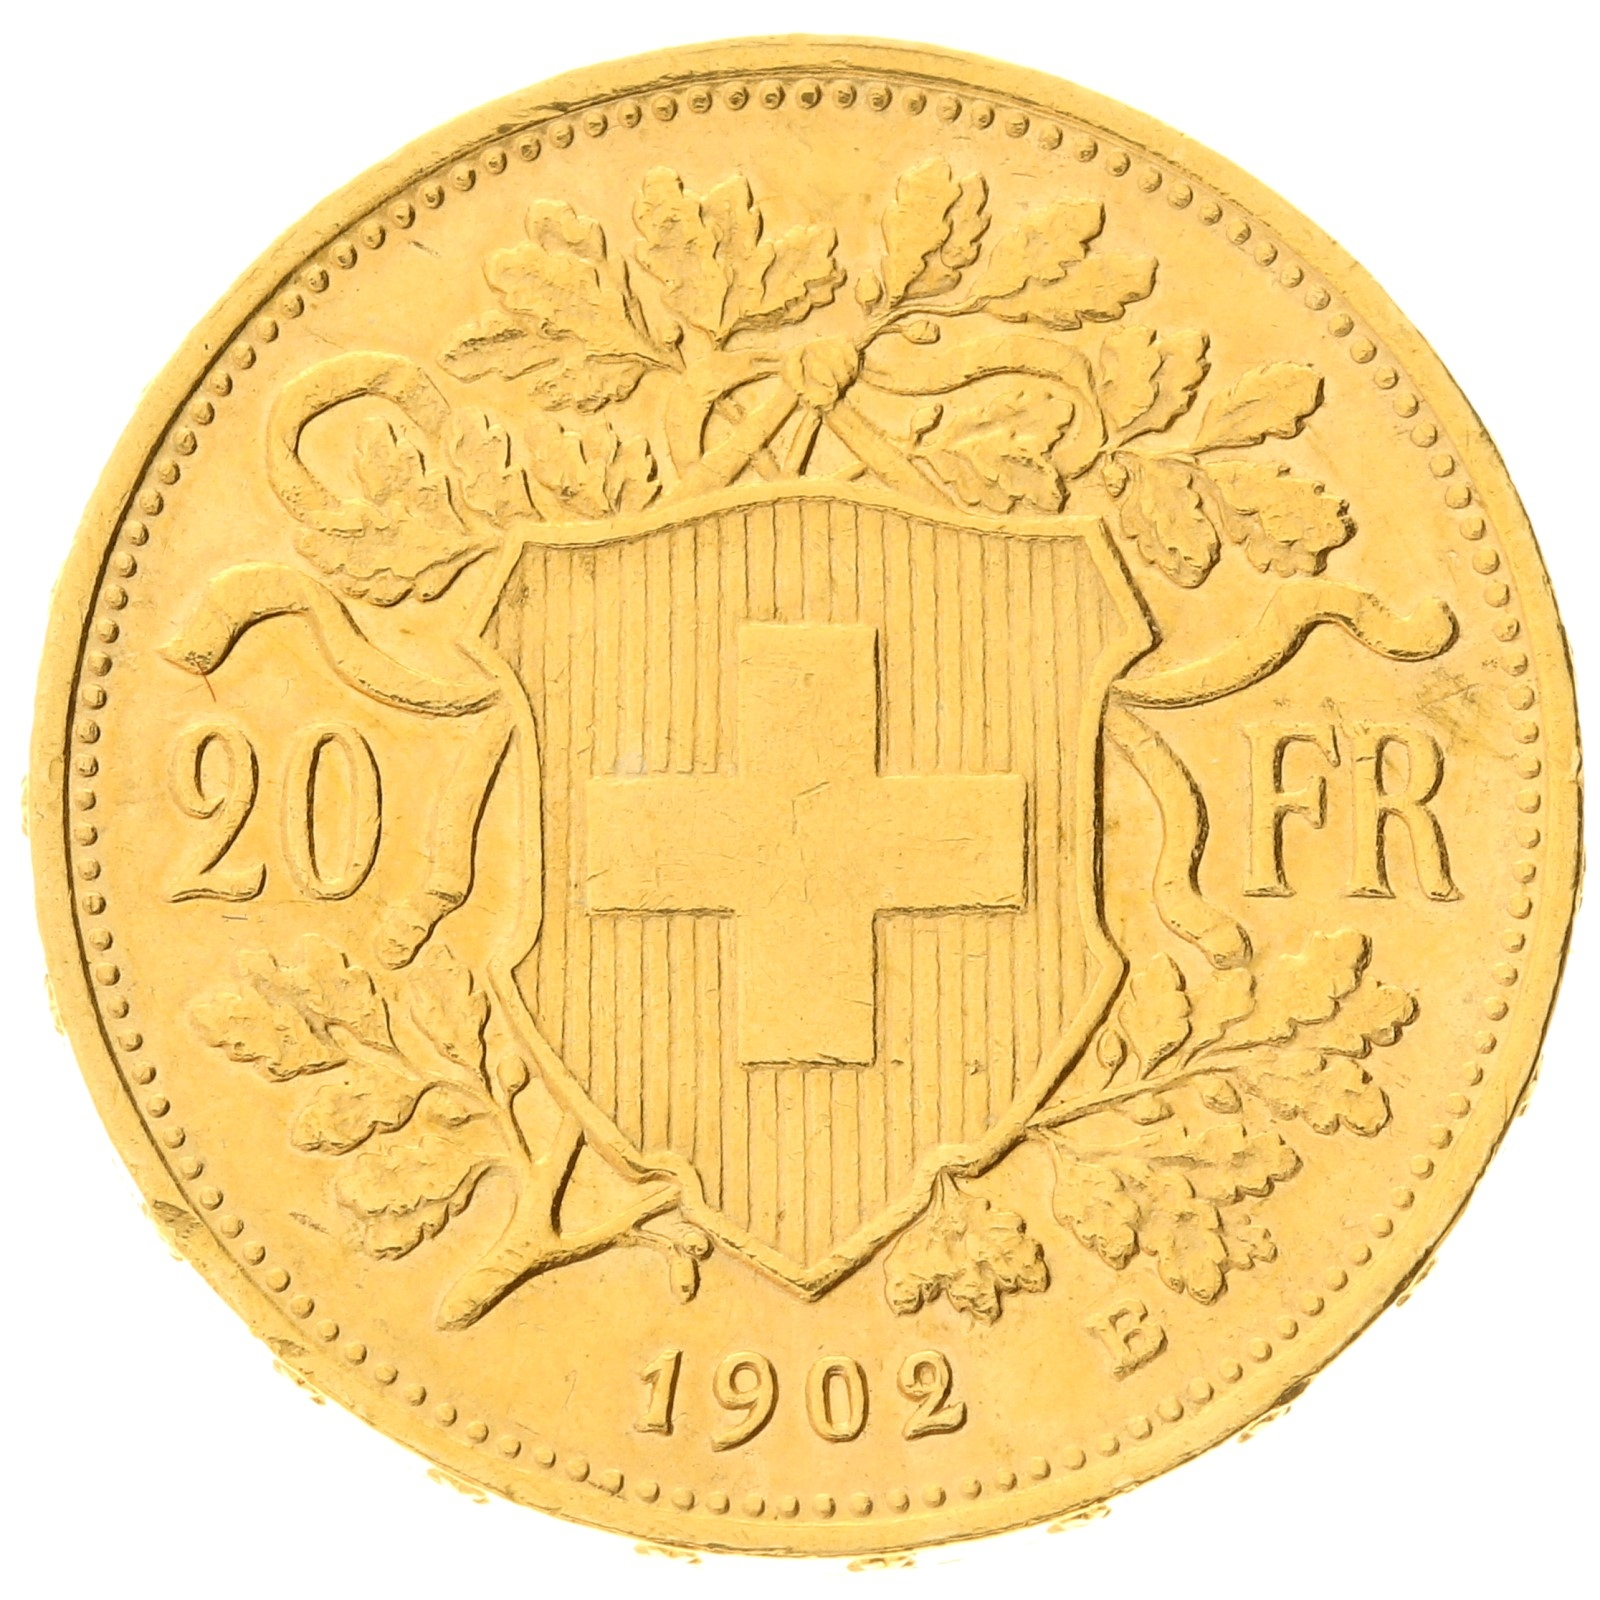 Switzerland - 20 francs - 1902